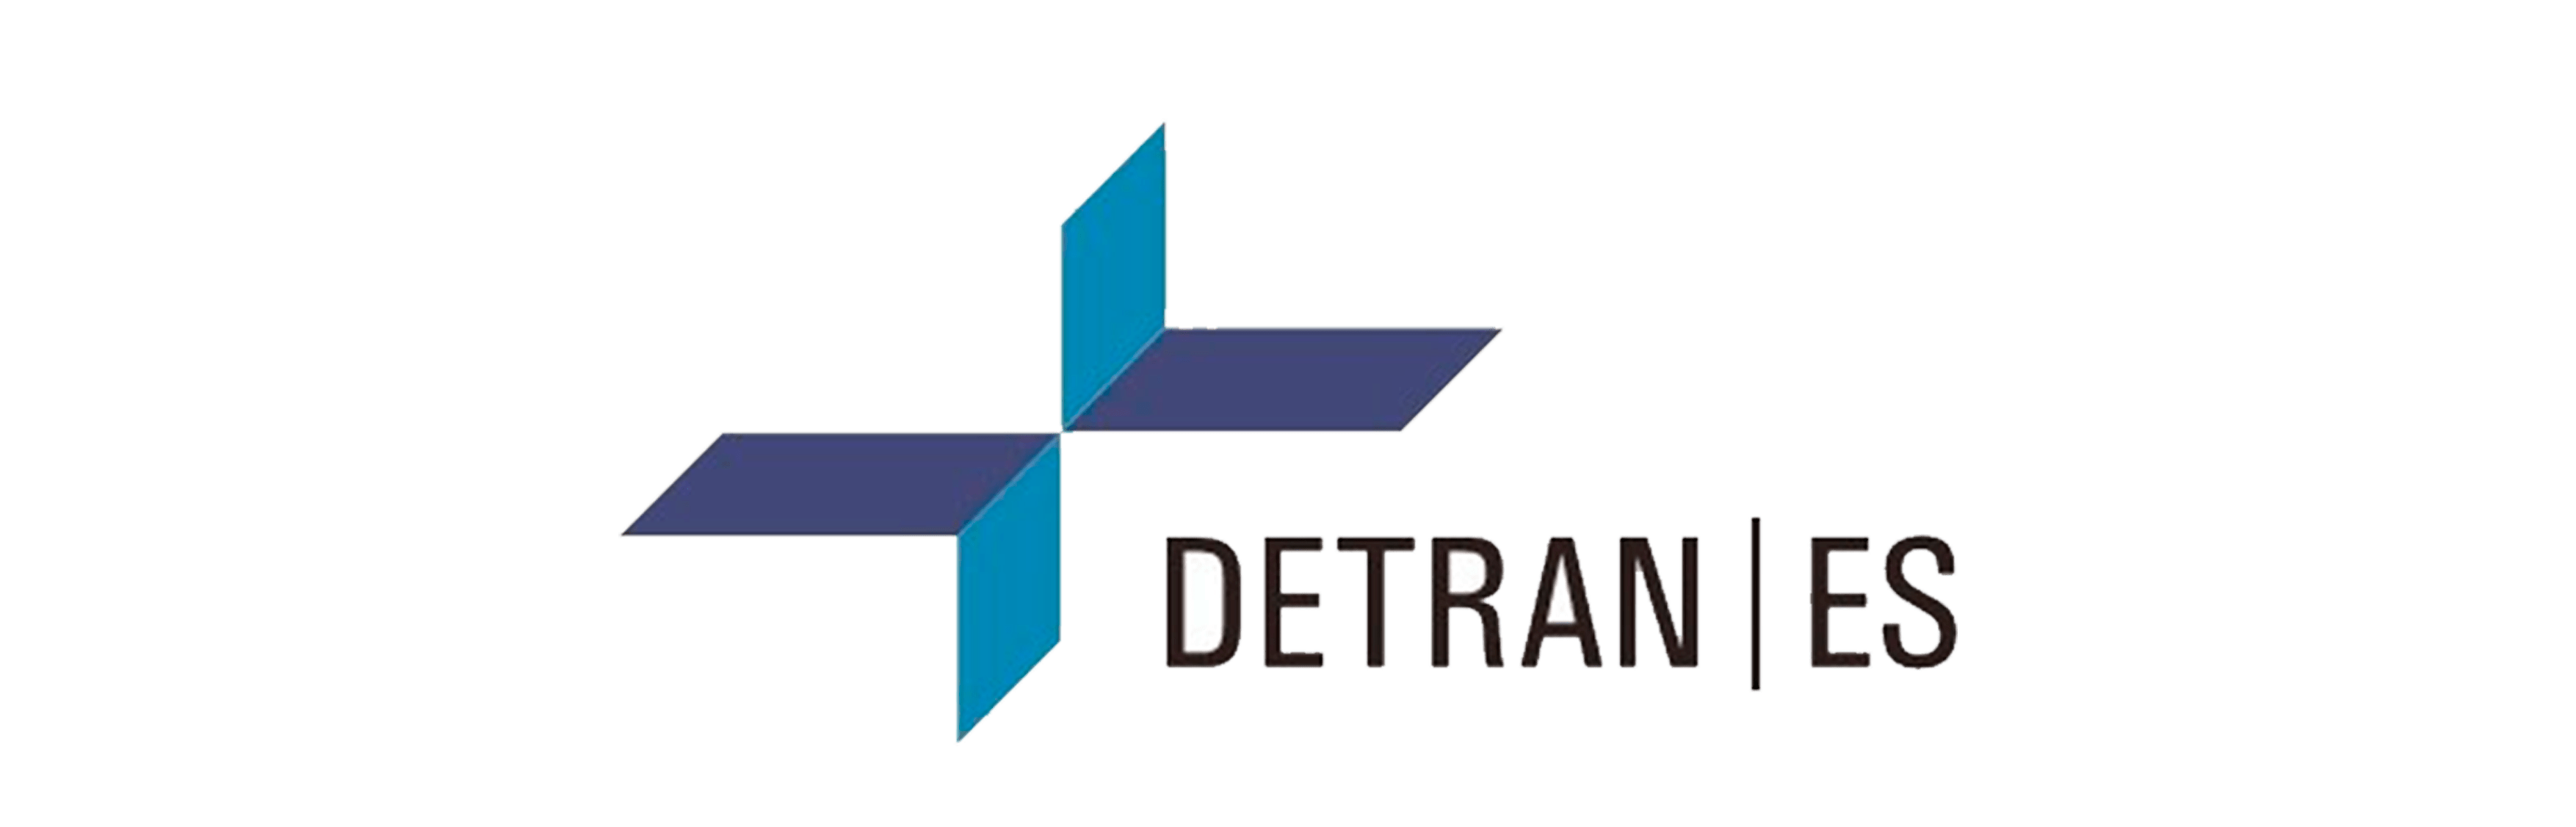 DETRAN-ES-Consulta-IPVA-Multas-e-Debitos-do-veiculo